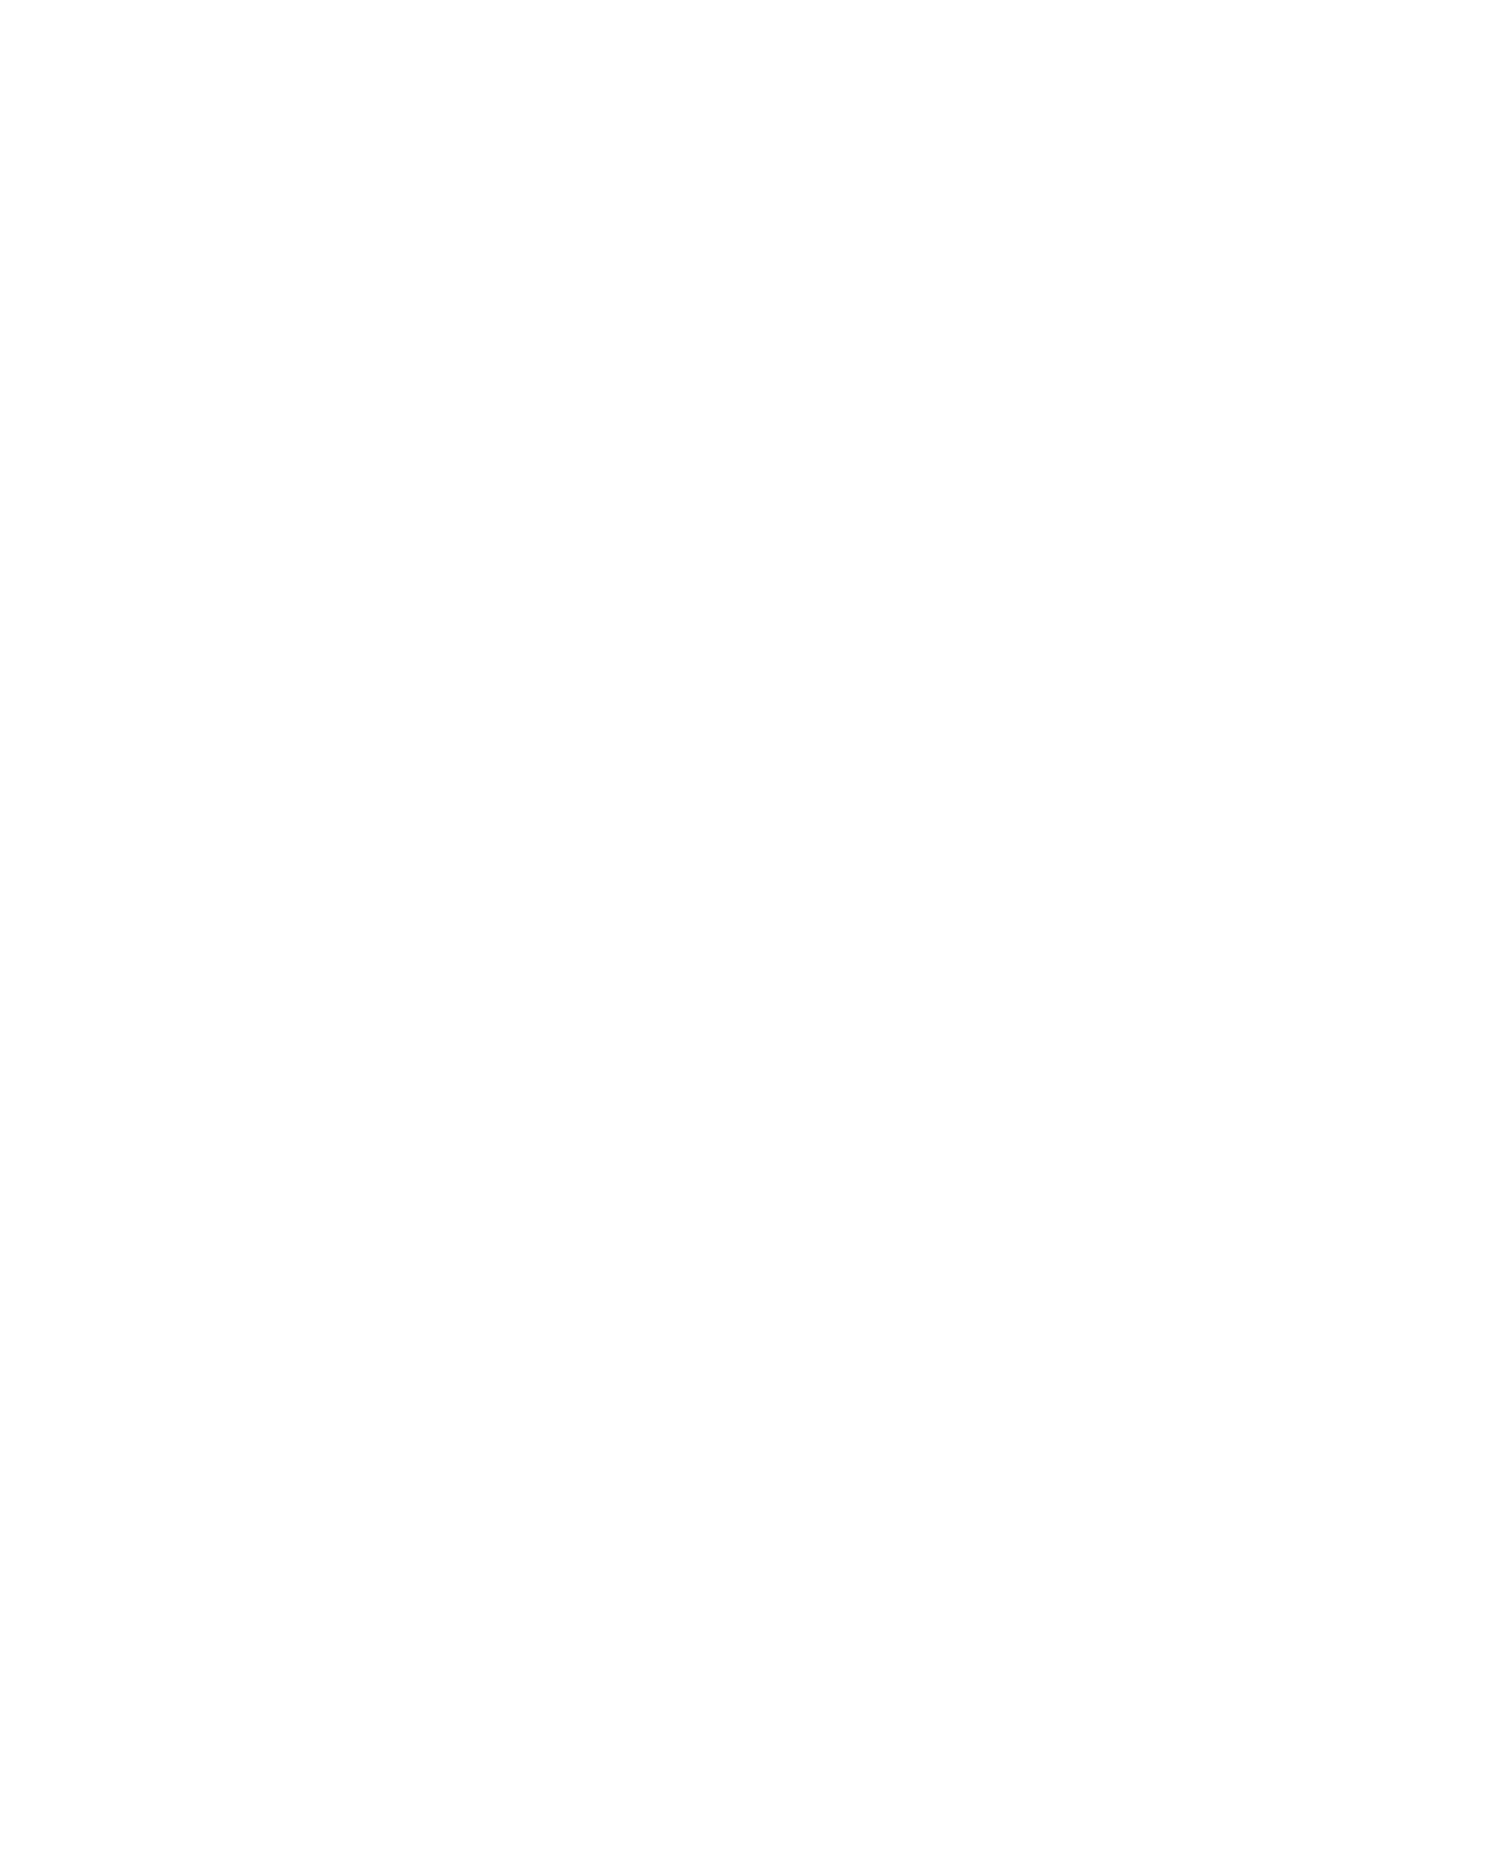 CenterPoint Church, serving Smyrna, Clayton and Central DE